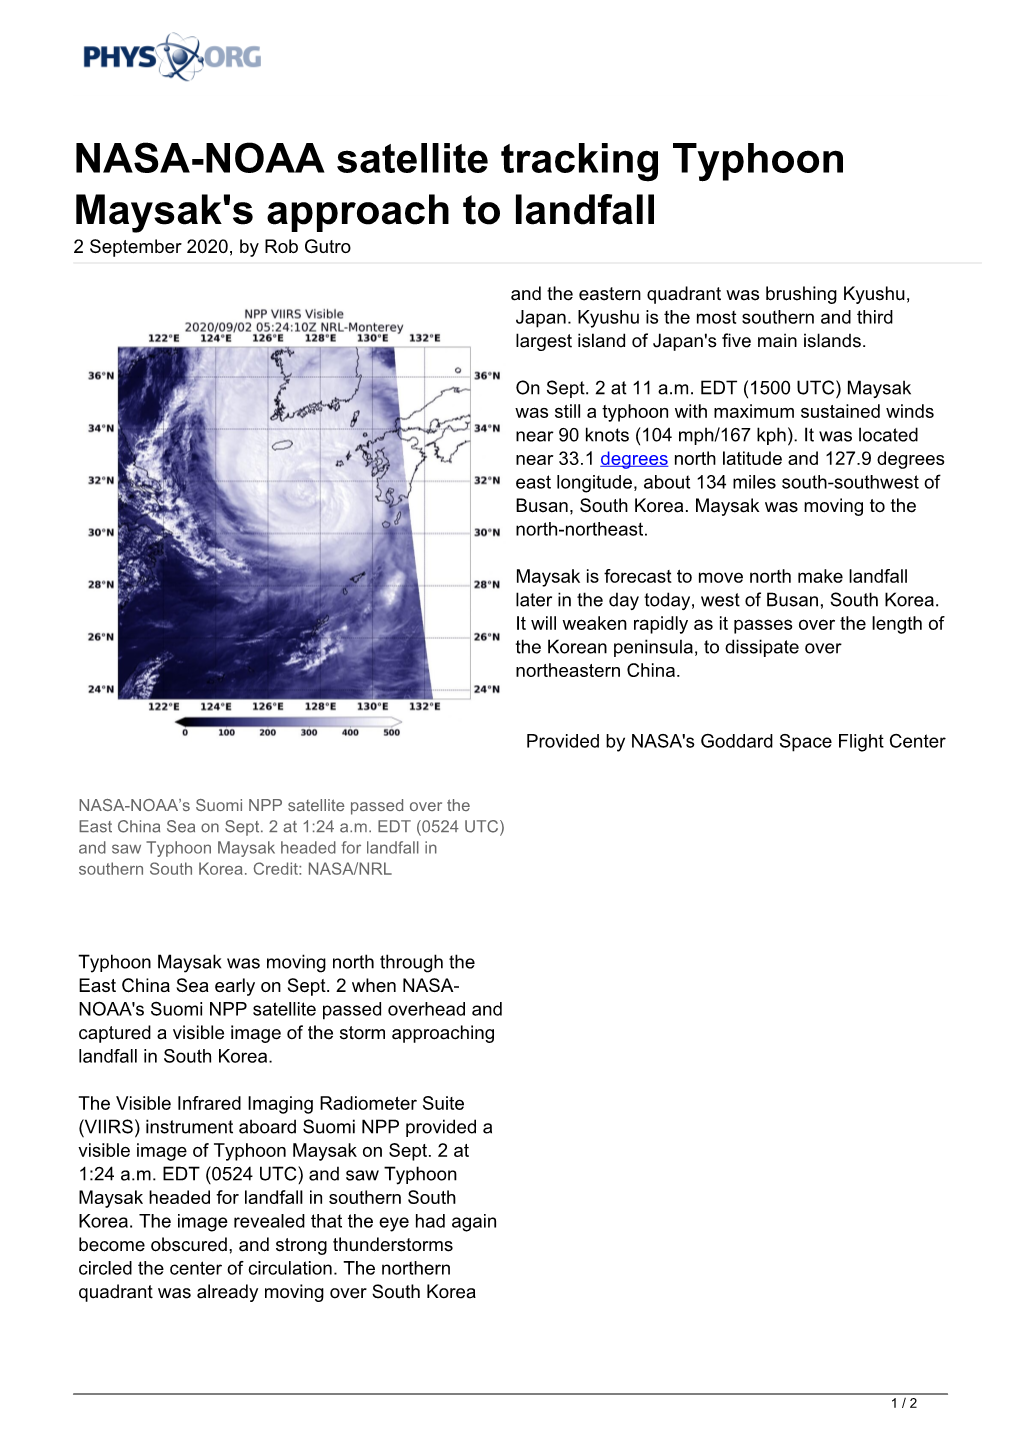 NASA-NOAA Satellite Tracking Typhoon Maysak's Approach to Landfall 2 September 2020, by Rob Gutro